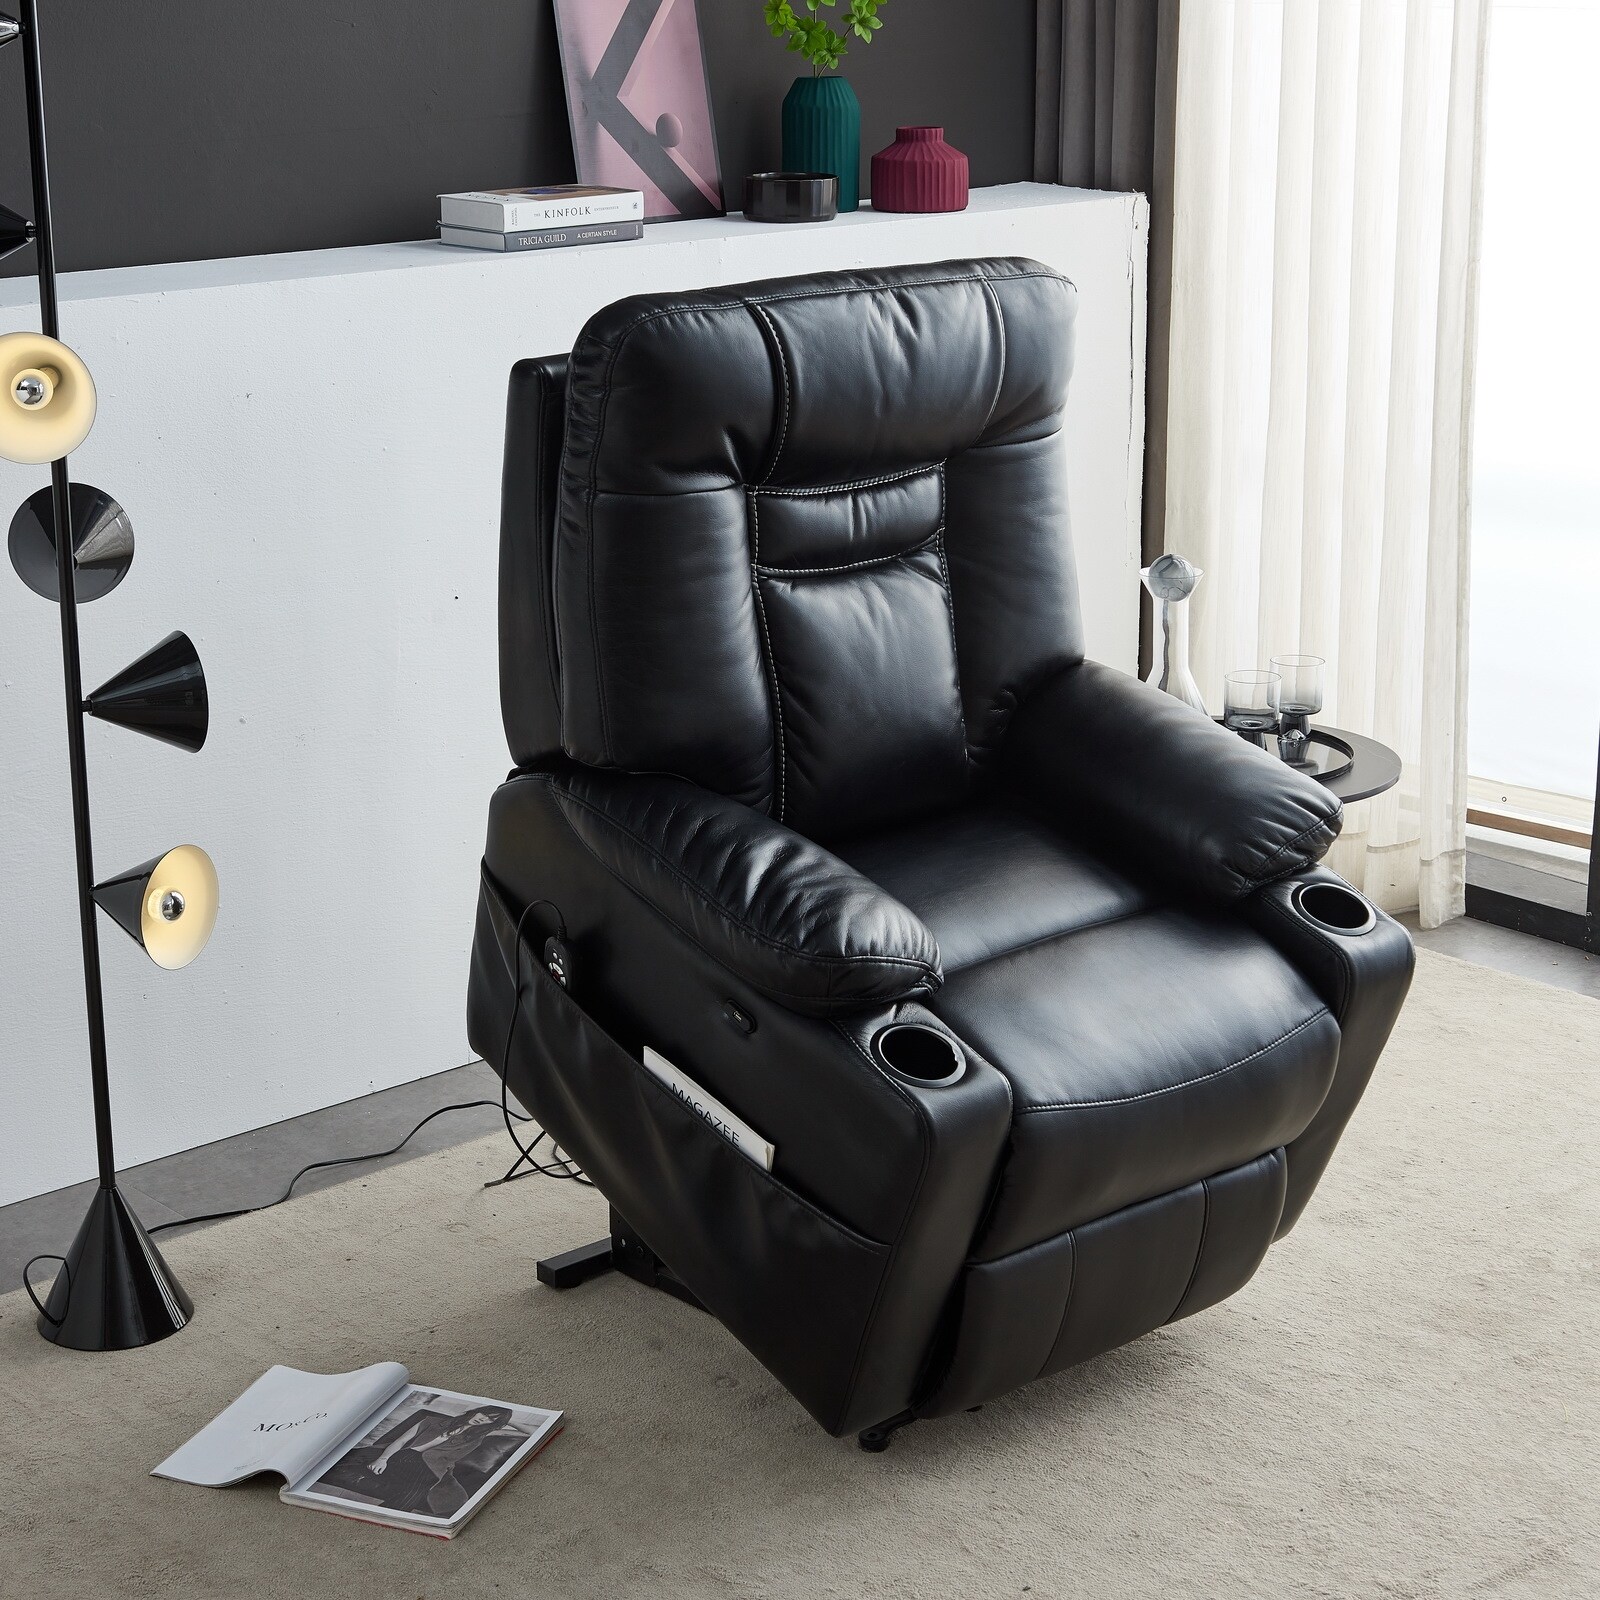 SMAX Power Lift Recliner for Elderly Lift Chair Living Room